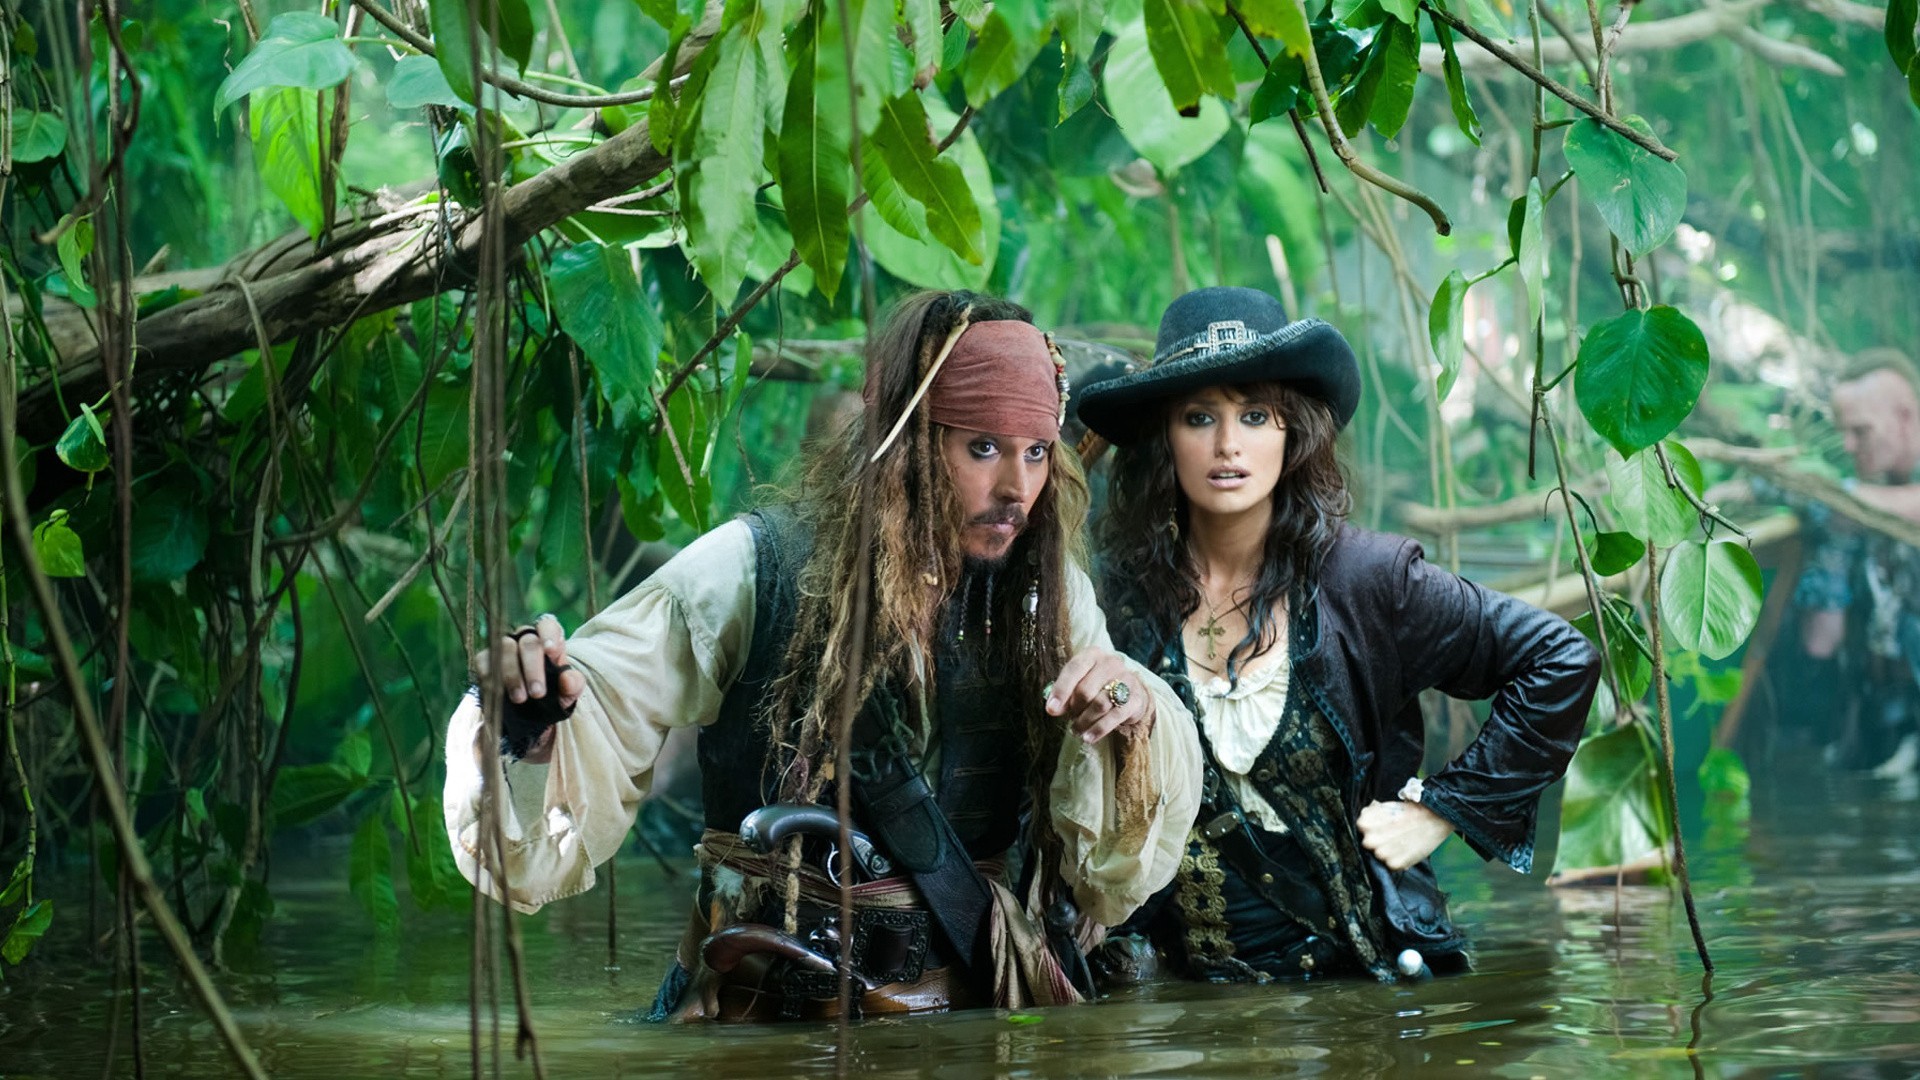 1920x1080 Penelope Cruz Pirates of the Caribbean Johnny Depp Captain Jack Sparrow  Pirates of the Caribbean On Stranger Tides wallpaper |  | 54273 |  ...